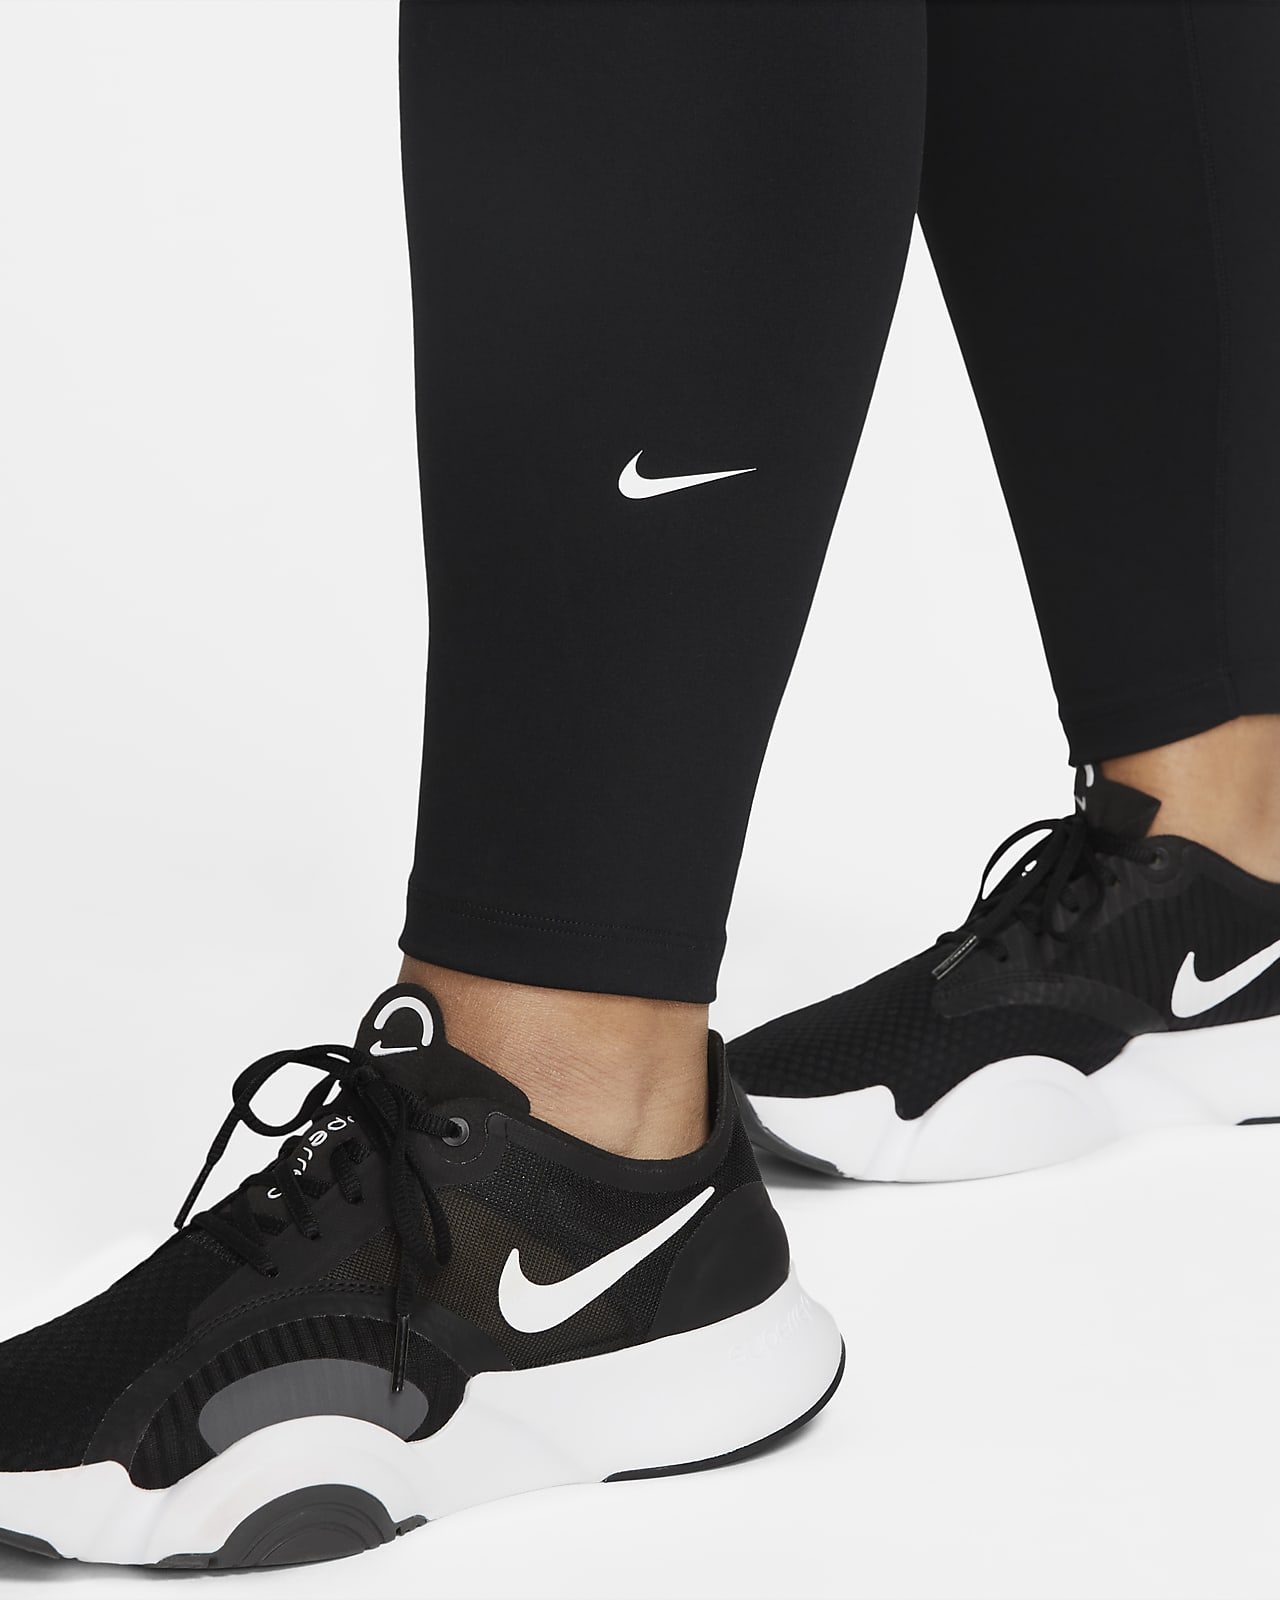 Nike One Women's High-Rise Leggings.